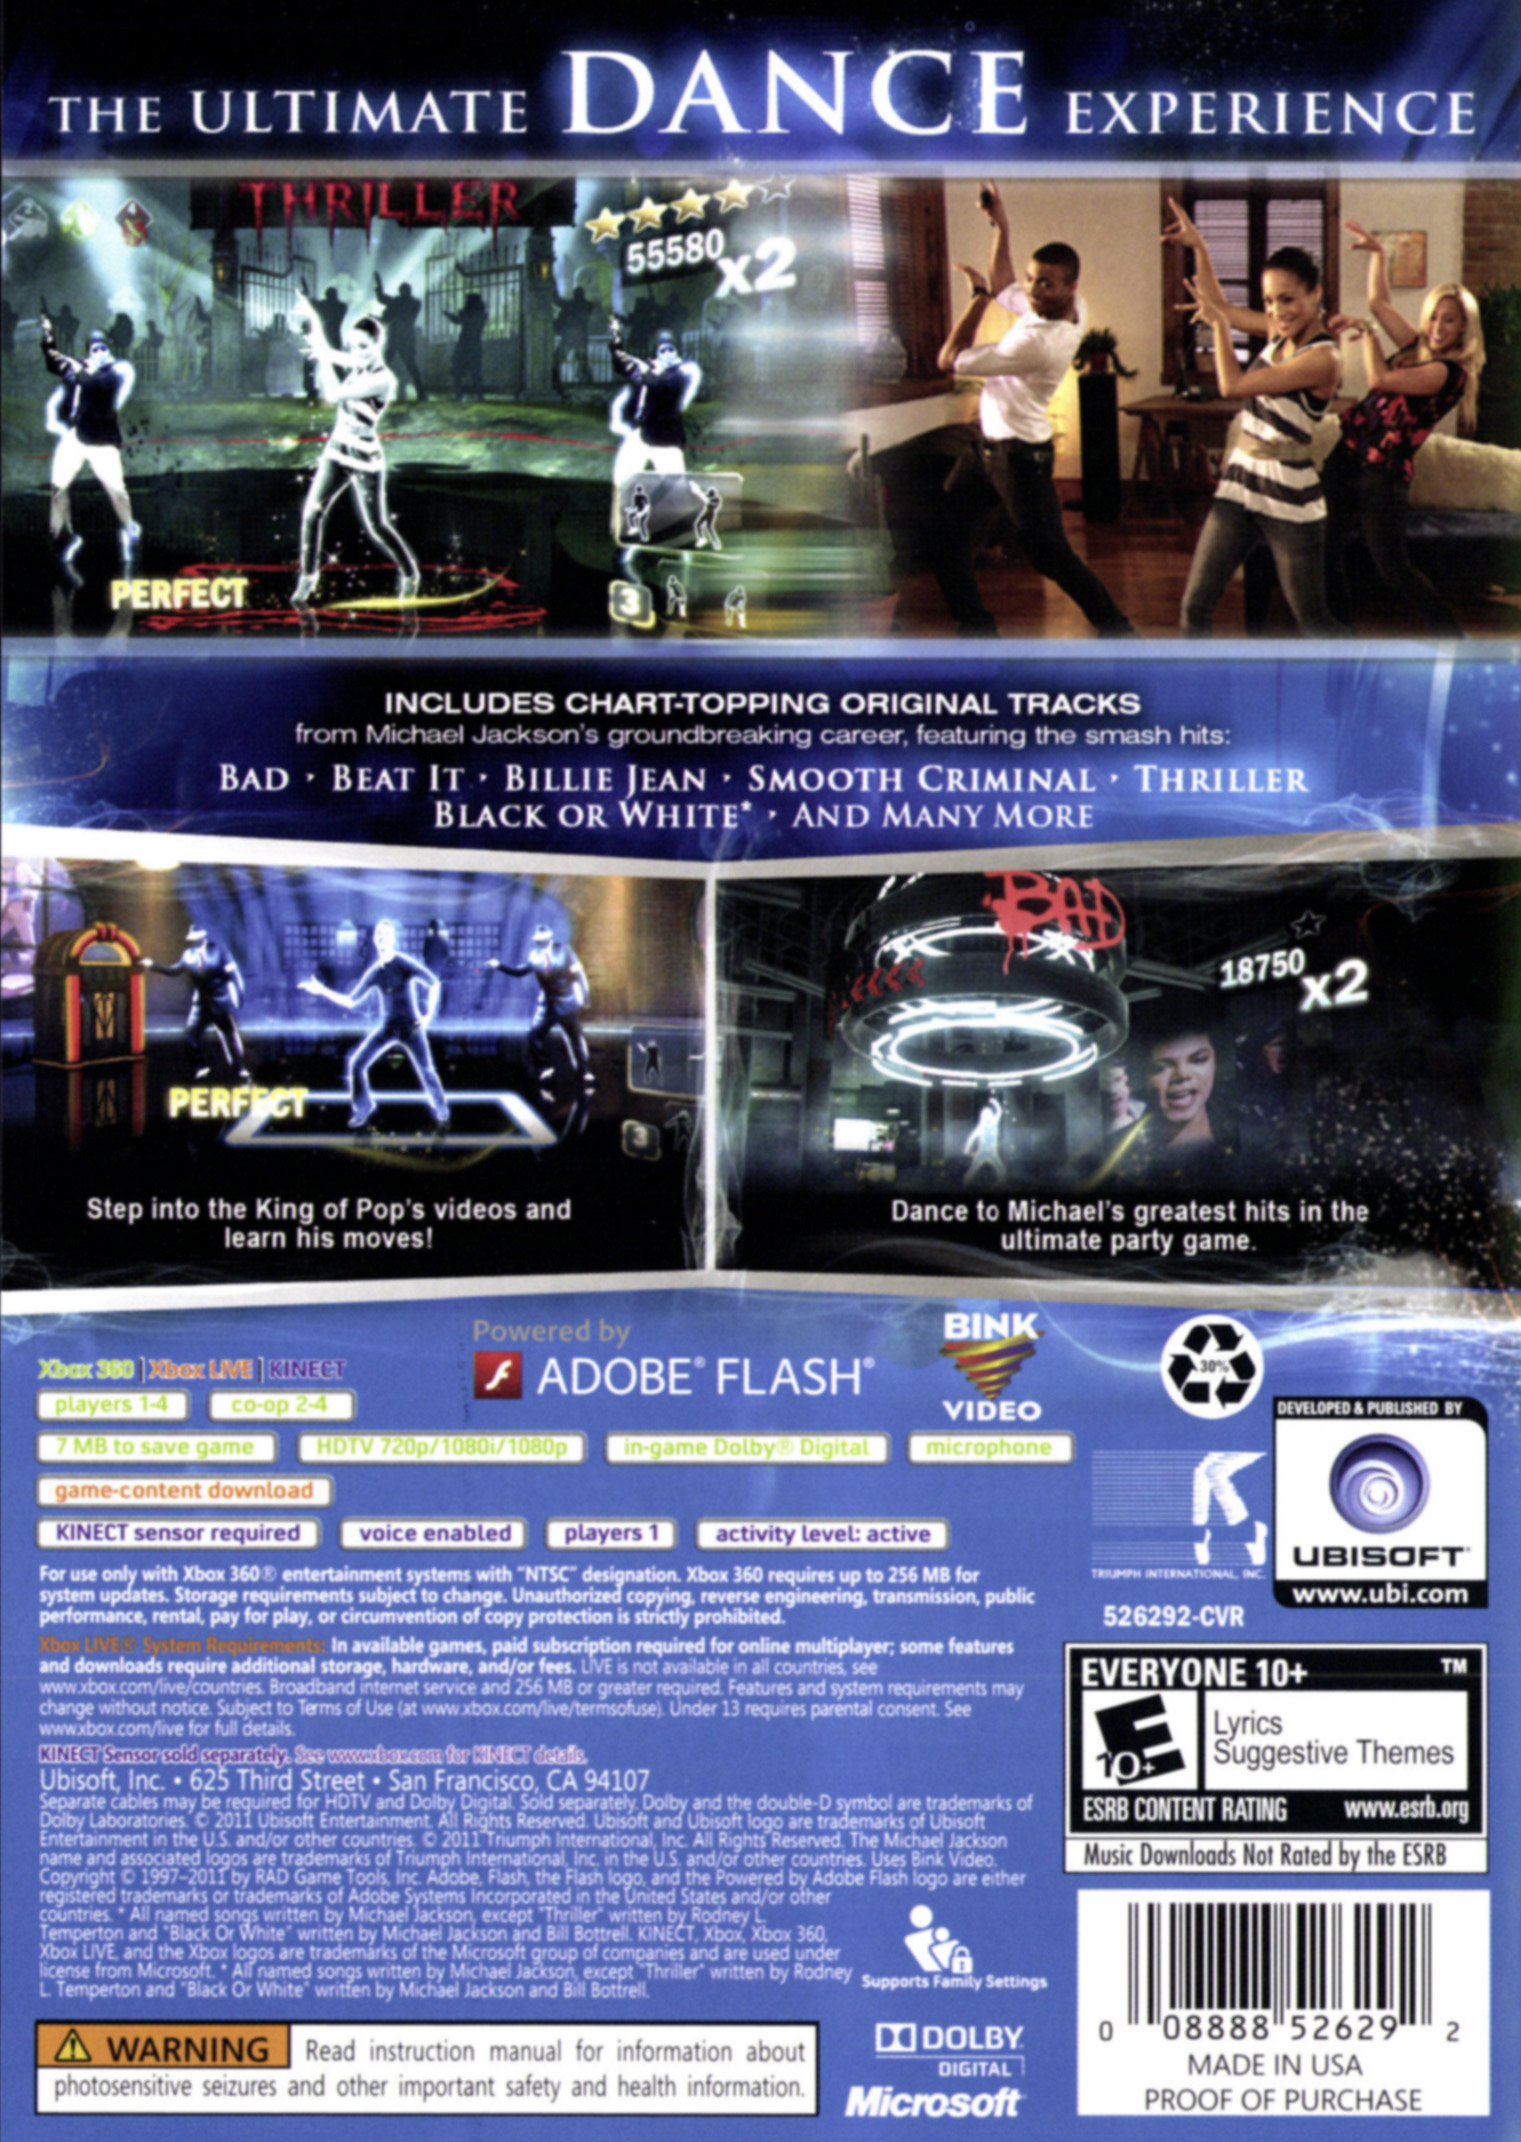 Michael Jackson The Experience (Xbox 360) Ubisoft, 8888526292 - image 2 of 6